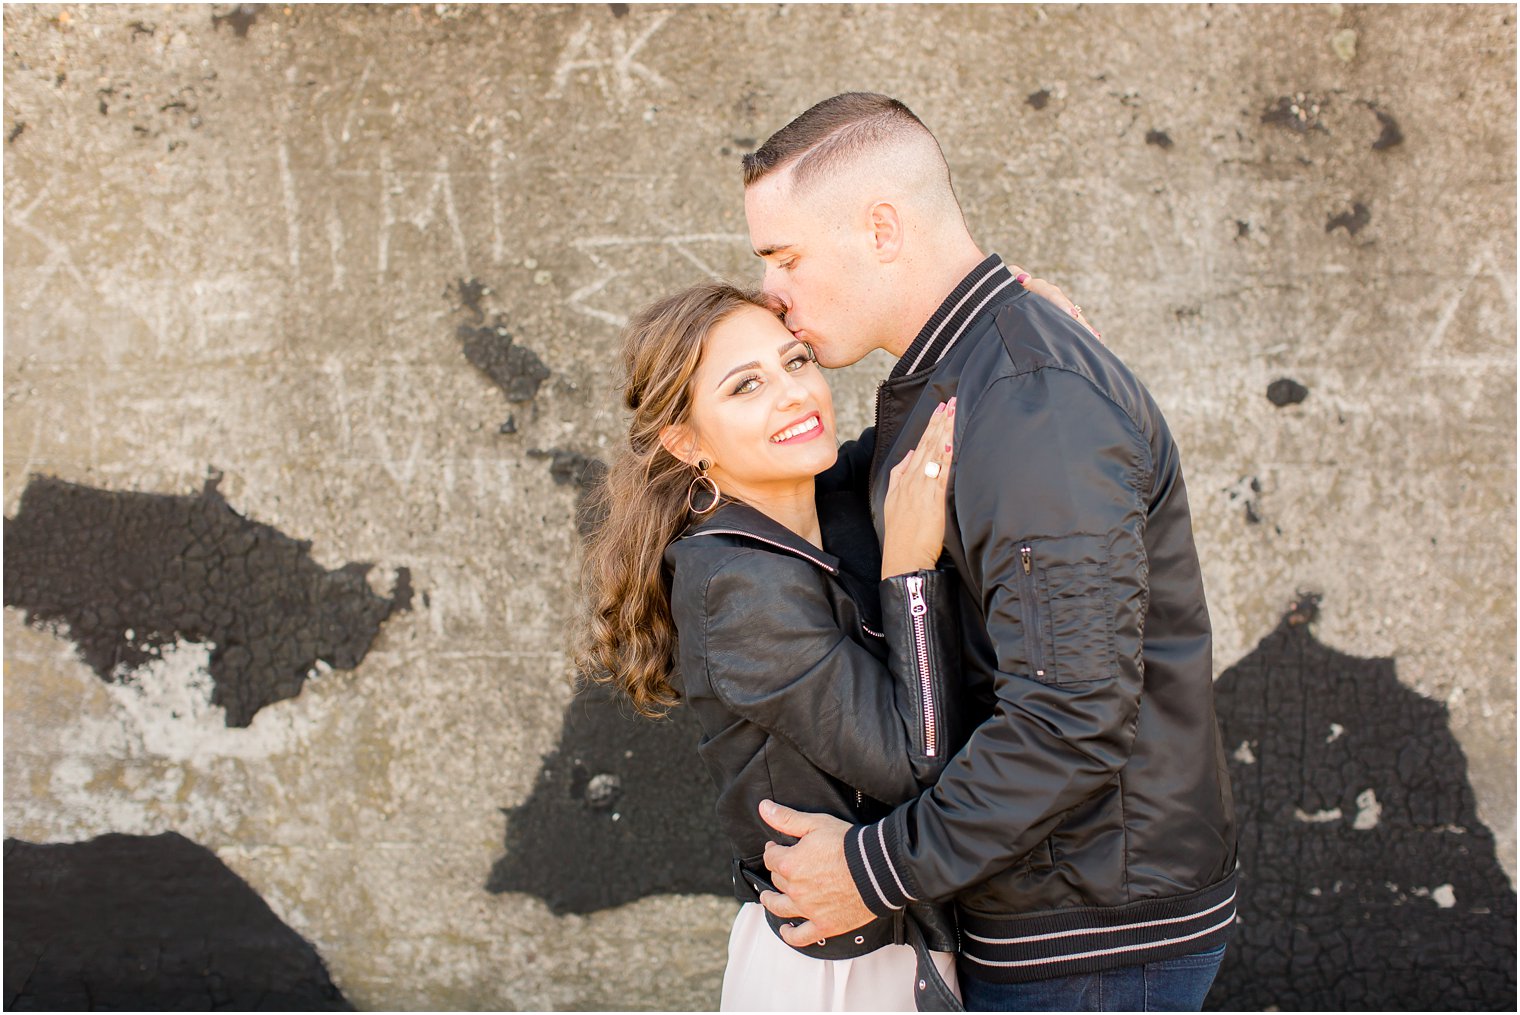 Engagement photos with black jackets | Photos by Idalia Photography